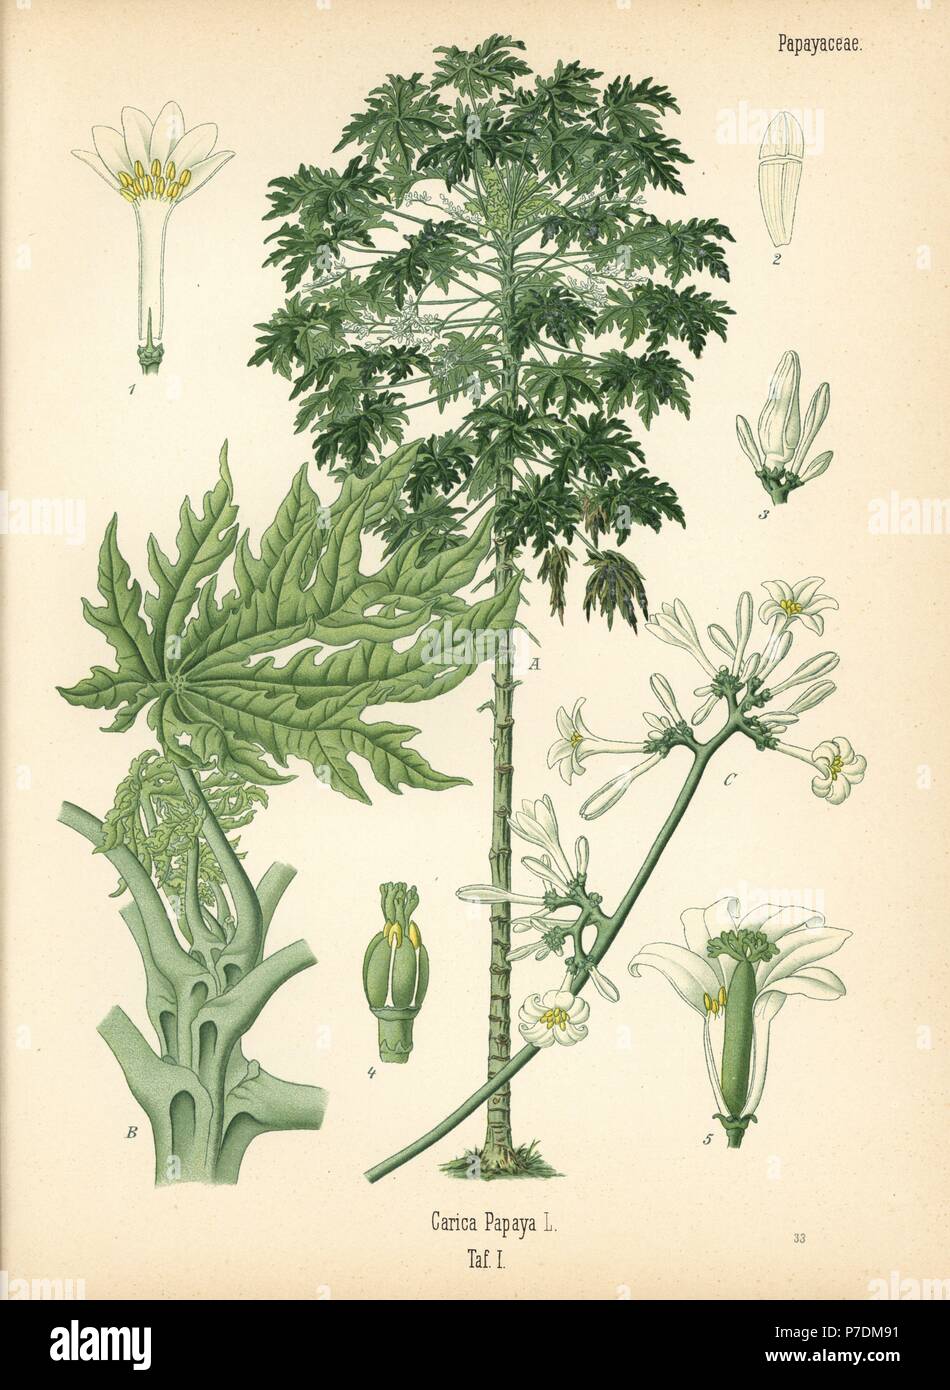 Papaya or papaw tree, Carica papaya. Chromolithograph after a botanical illustration from Hermann Adolph Koehler's Medicinal Plants, edited by Gustav Pabst, Koehler, Germany, 1887. Stock Photo